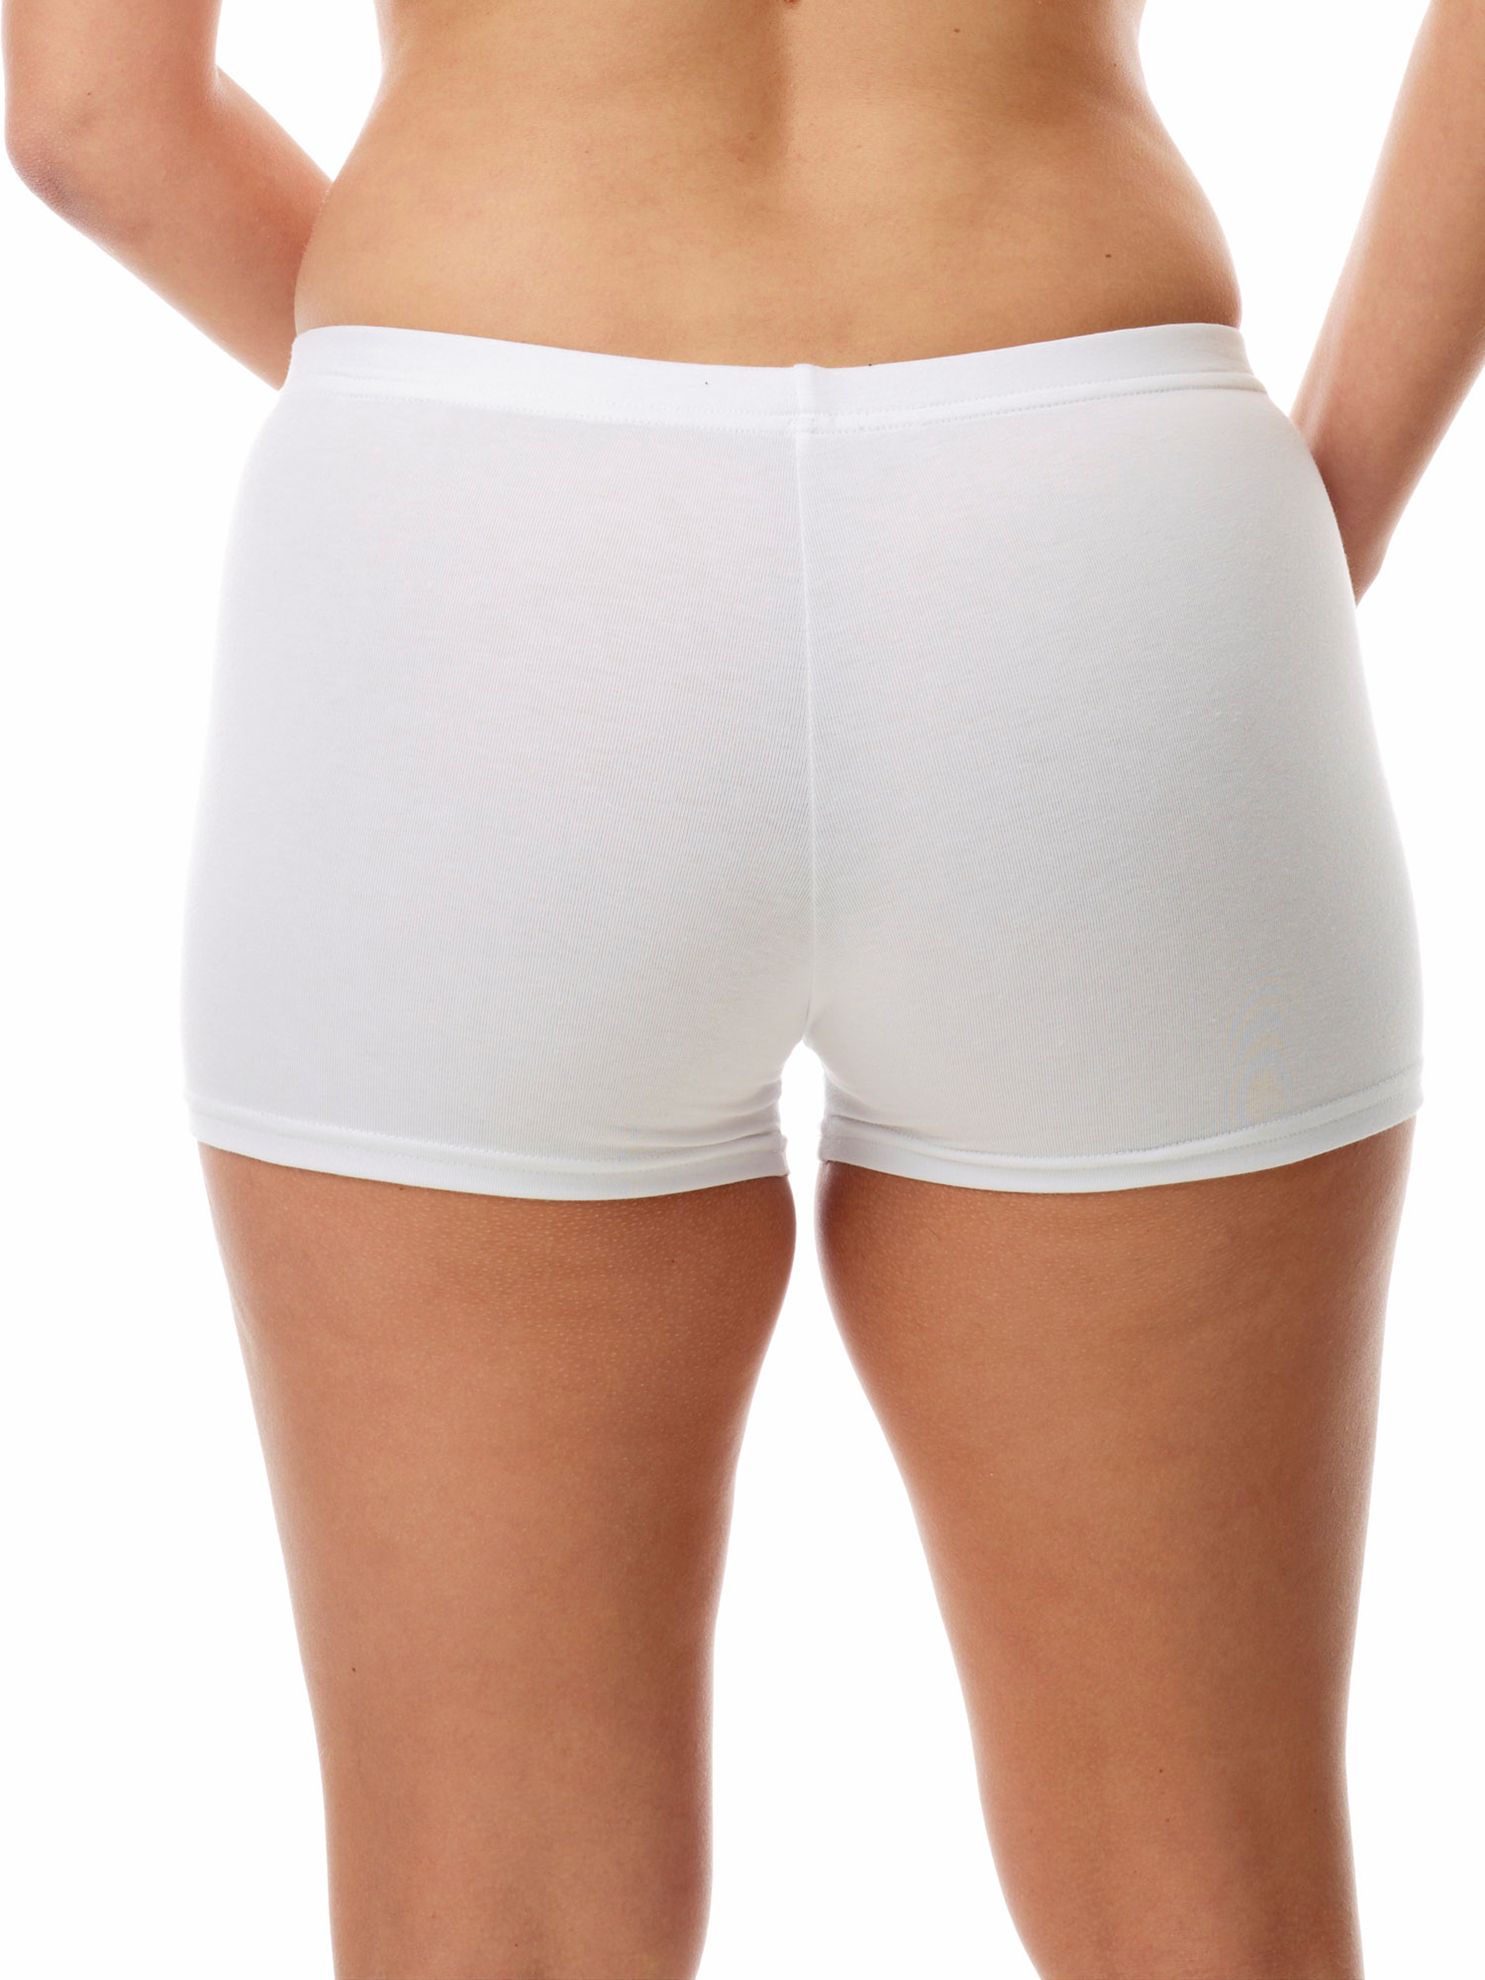 Underworks Women's Cotton Spandex Boxers Bloomers Boyleg Panties 3-Pack  Small Black at  Women's Clothing store: Athletic Underwear